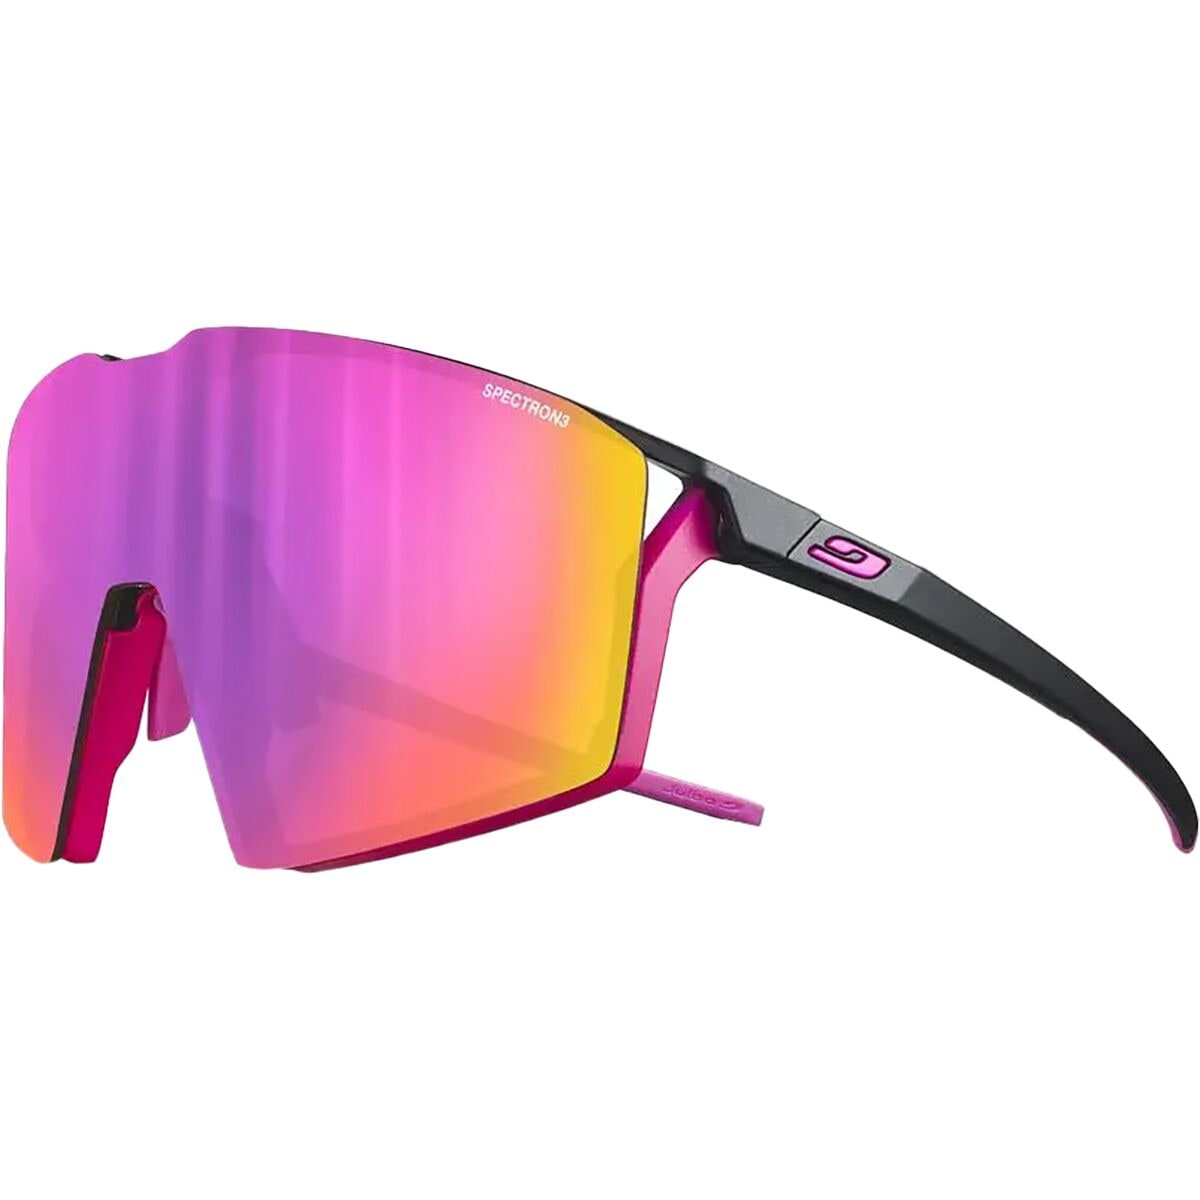 Julbo Edge Spectron Sunglasses Matte Black/Pink/Spectron 3, One Size - Men's